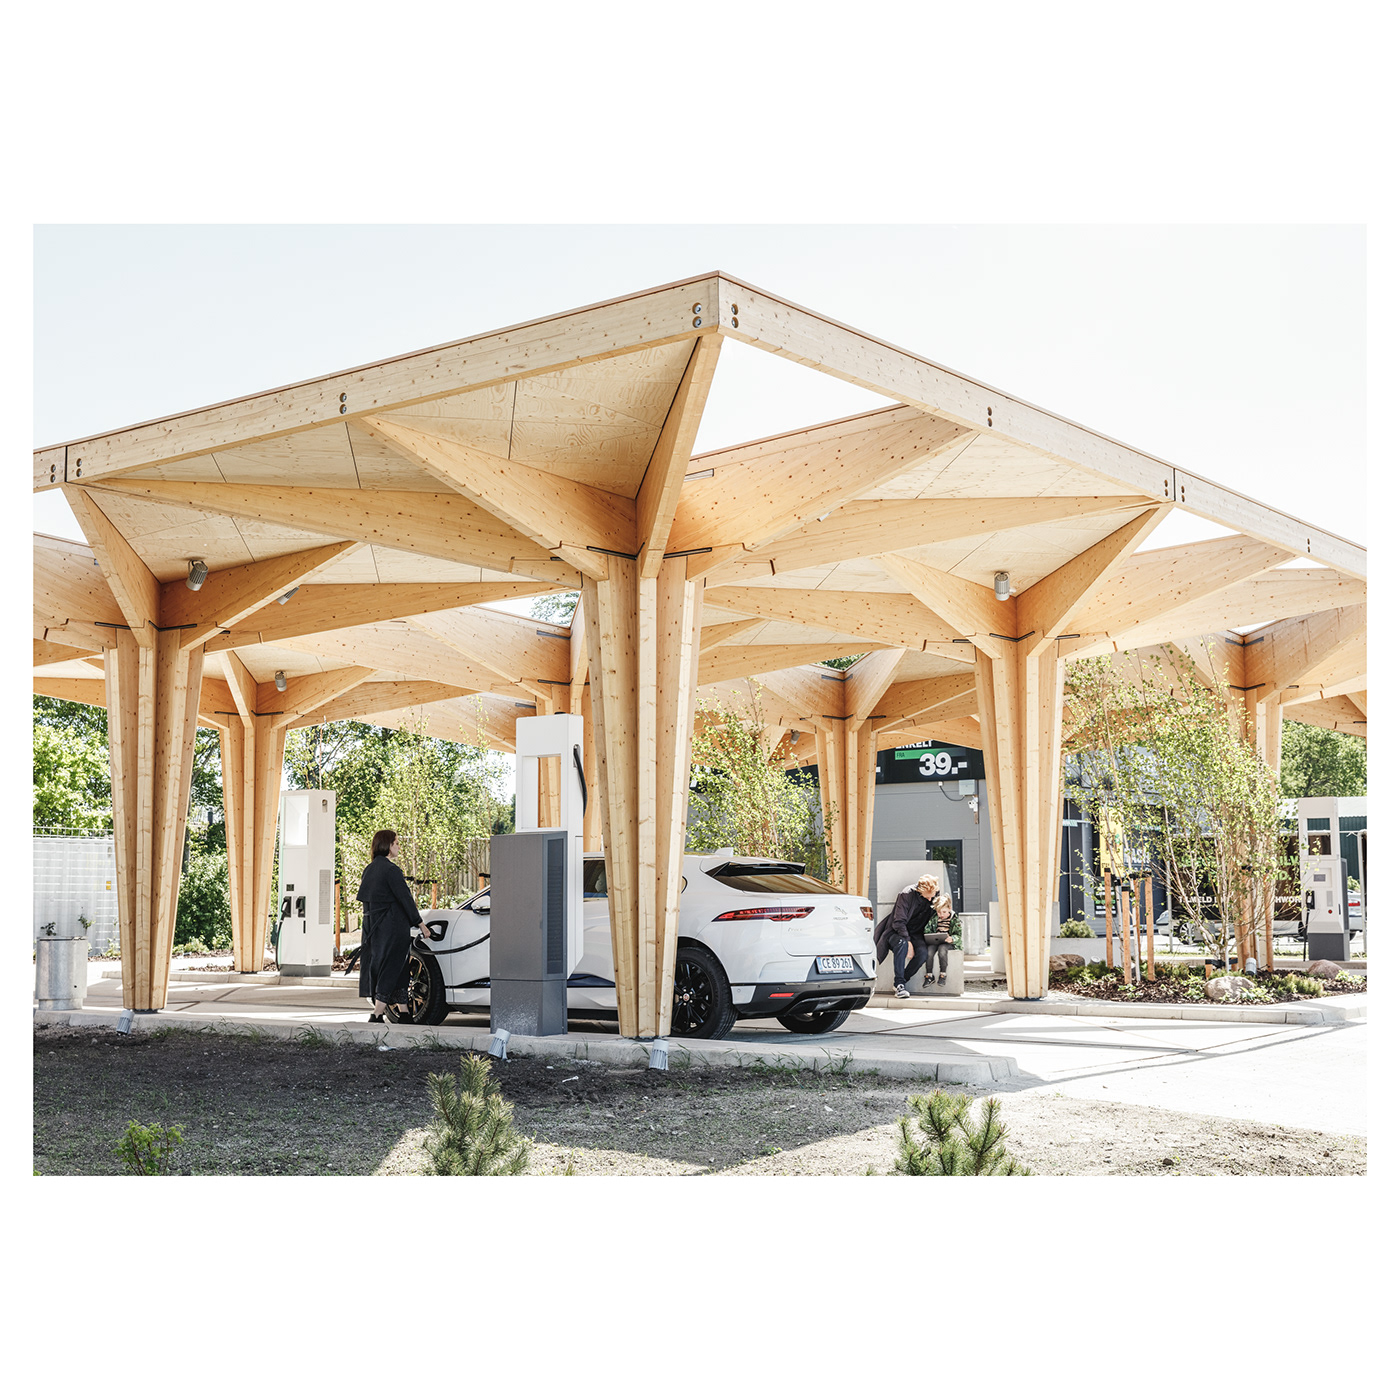 Electric Car charging station glulam wood Scandinavian design danish architecture architecture design STATION wood architecture